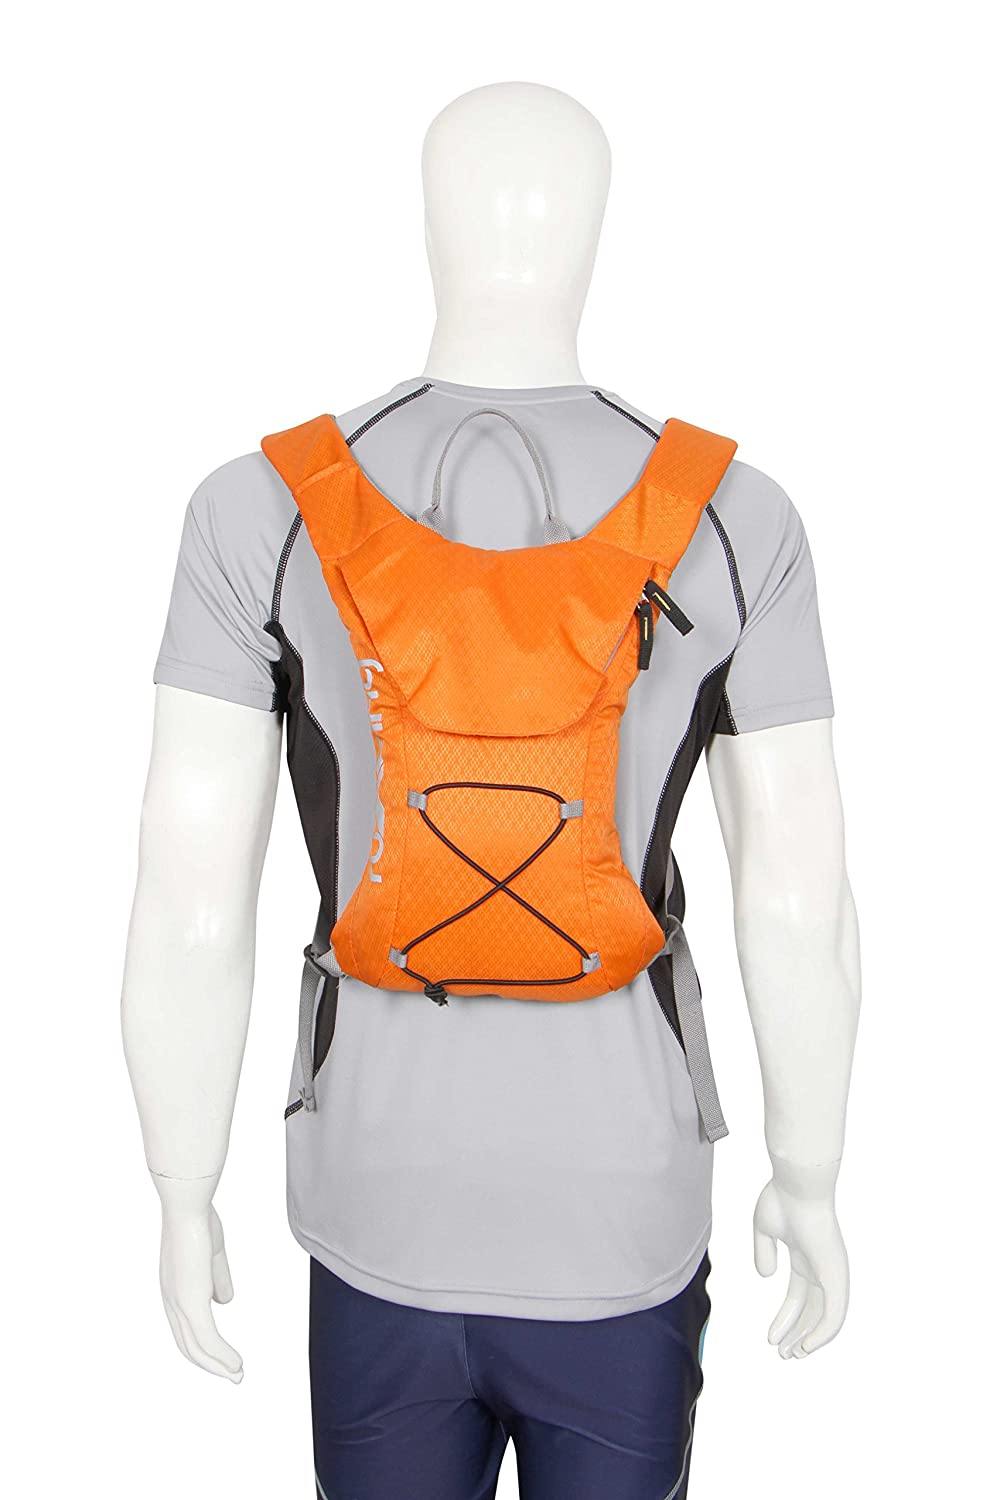 Nivia 5197 Polyester Running-2 Bag Pack (Orange) - Best Price online Prokicksports.com